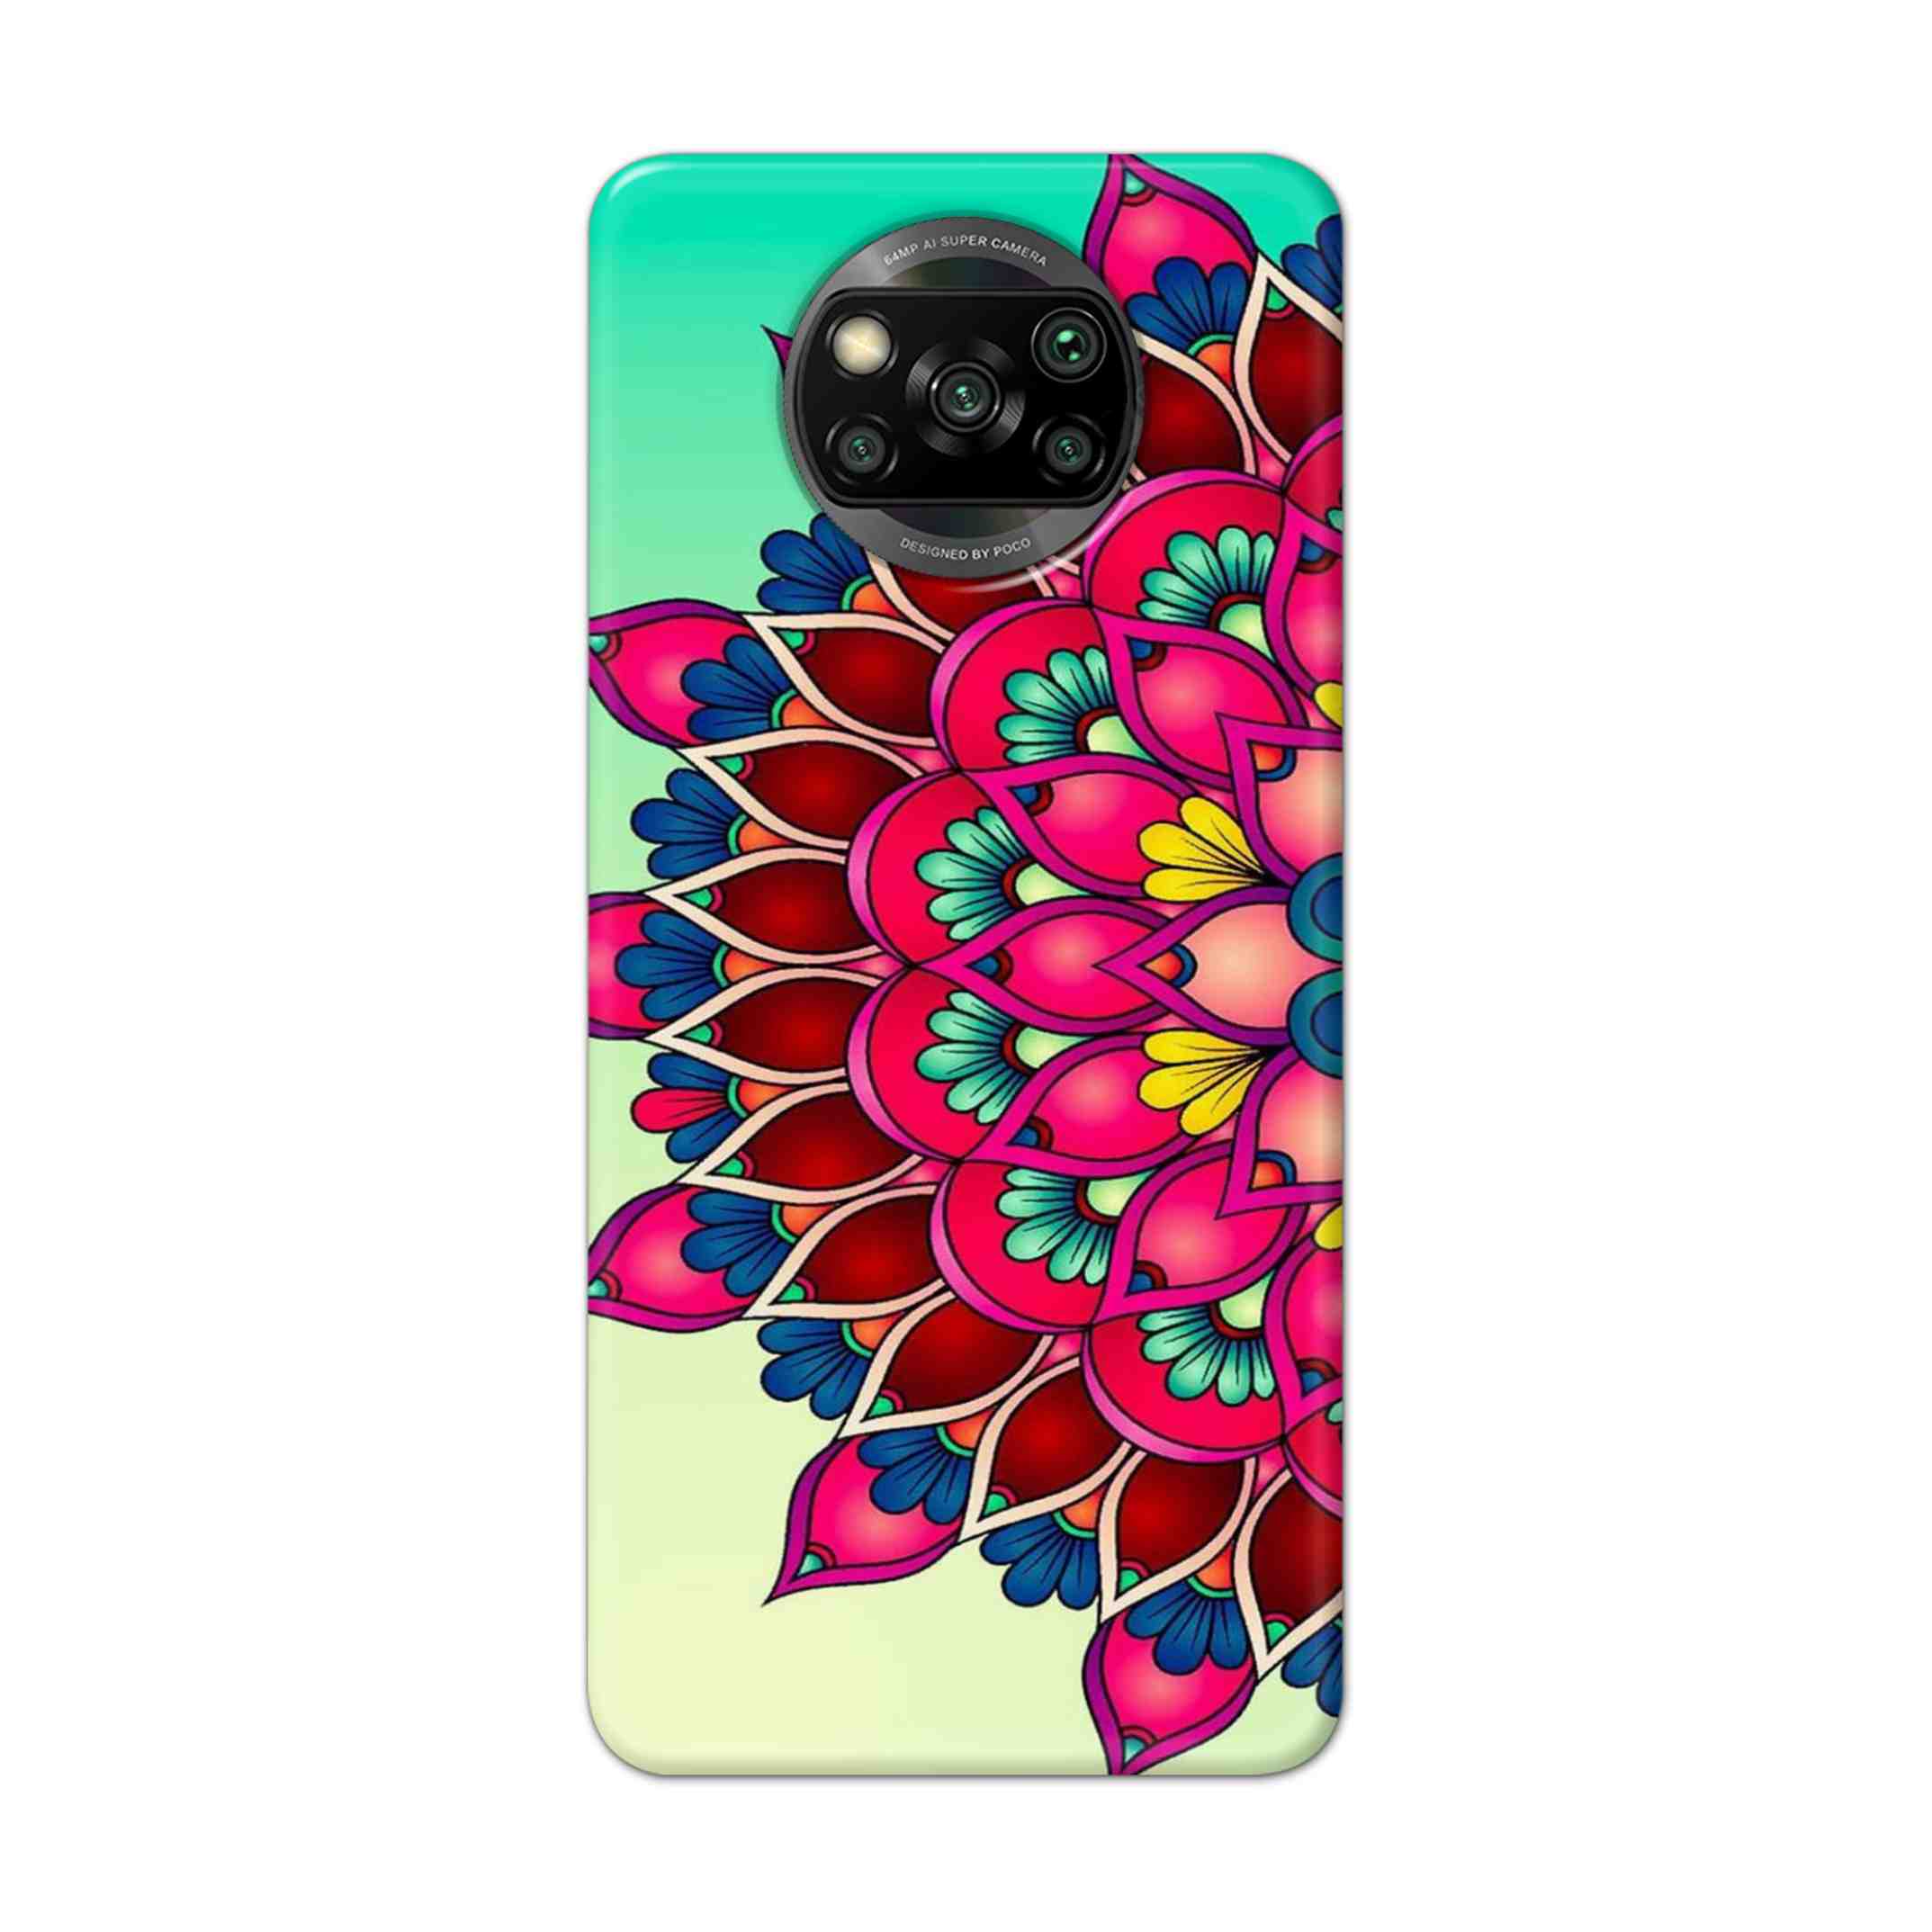 Buy Lotus Mandala Hard Back Mobile Phone Case Cover For Pcoc X3 NFC Online